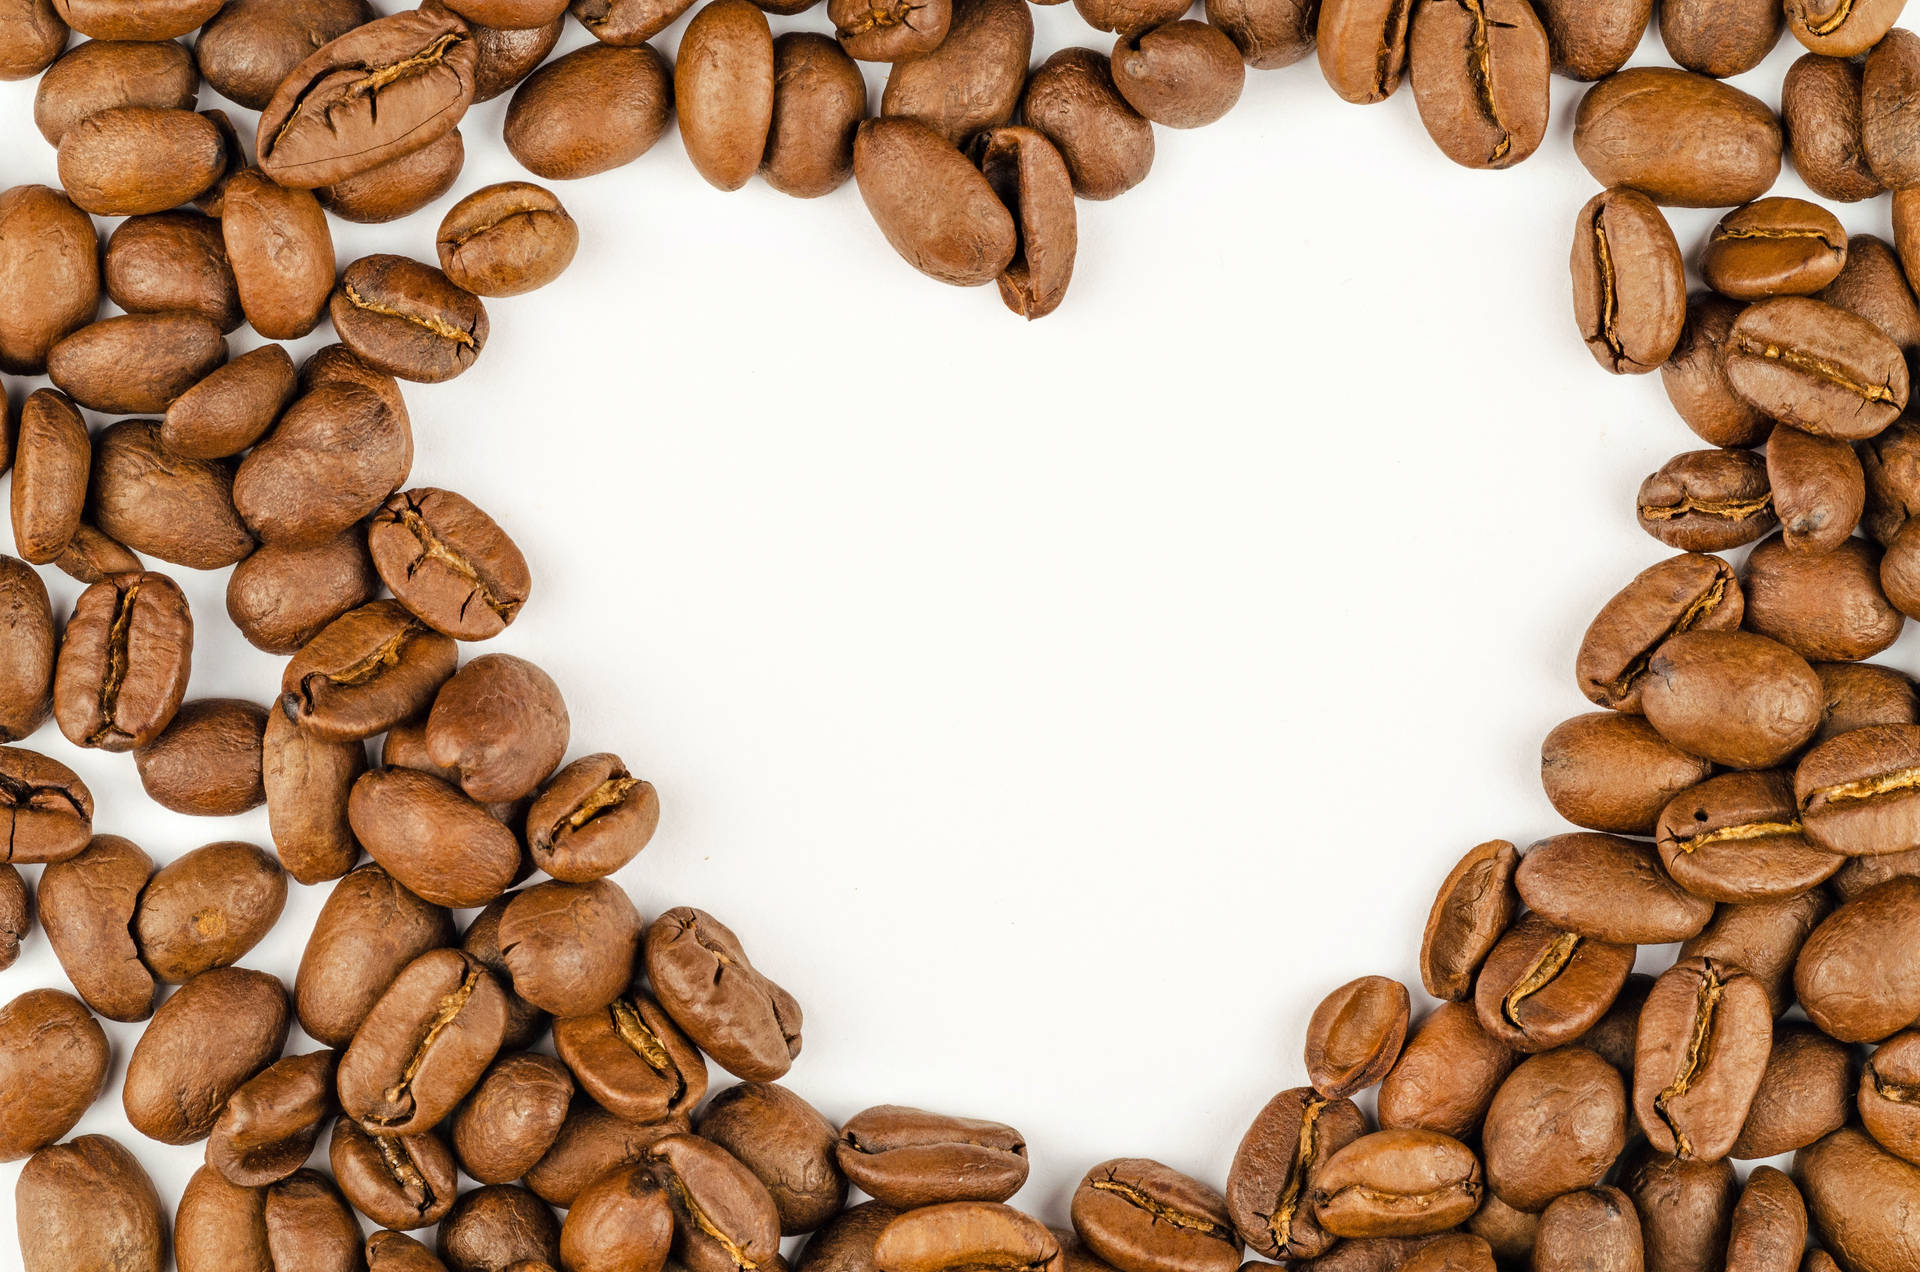 Medium Roast Coffee Beans Heart Picture